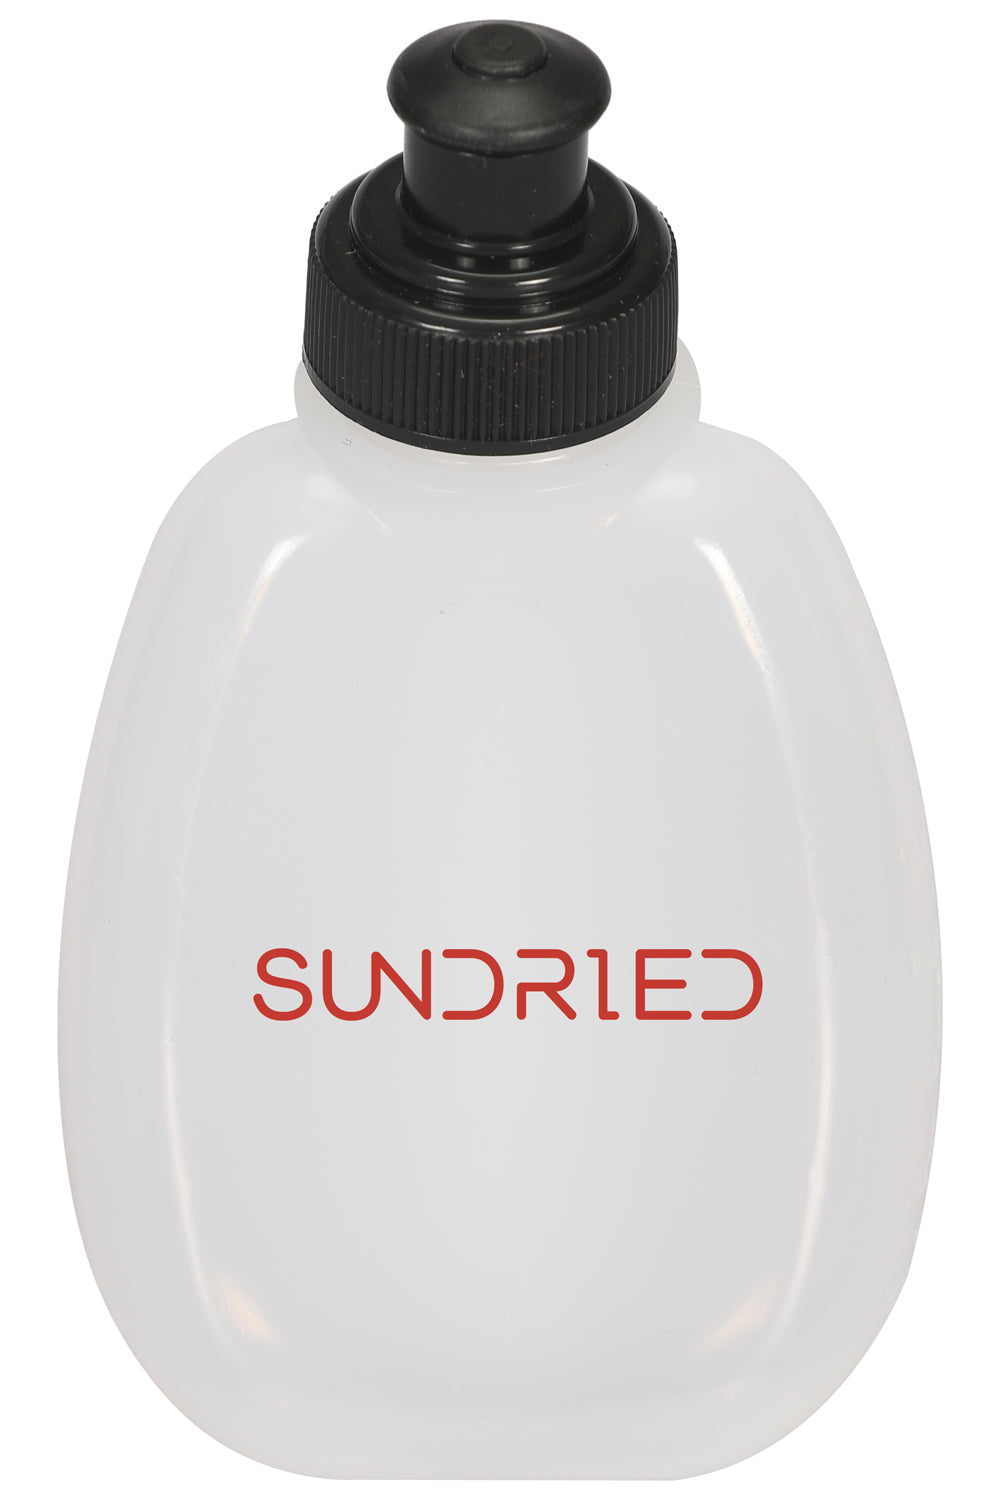 Sundried 175ml Bottle Bottle SD0416 Activewear